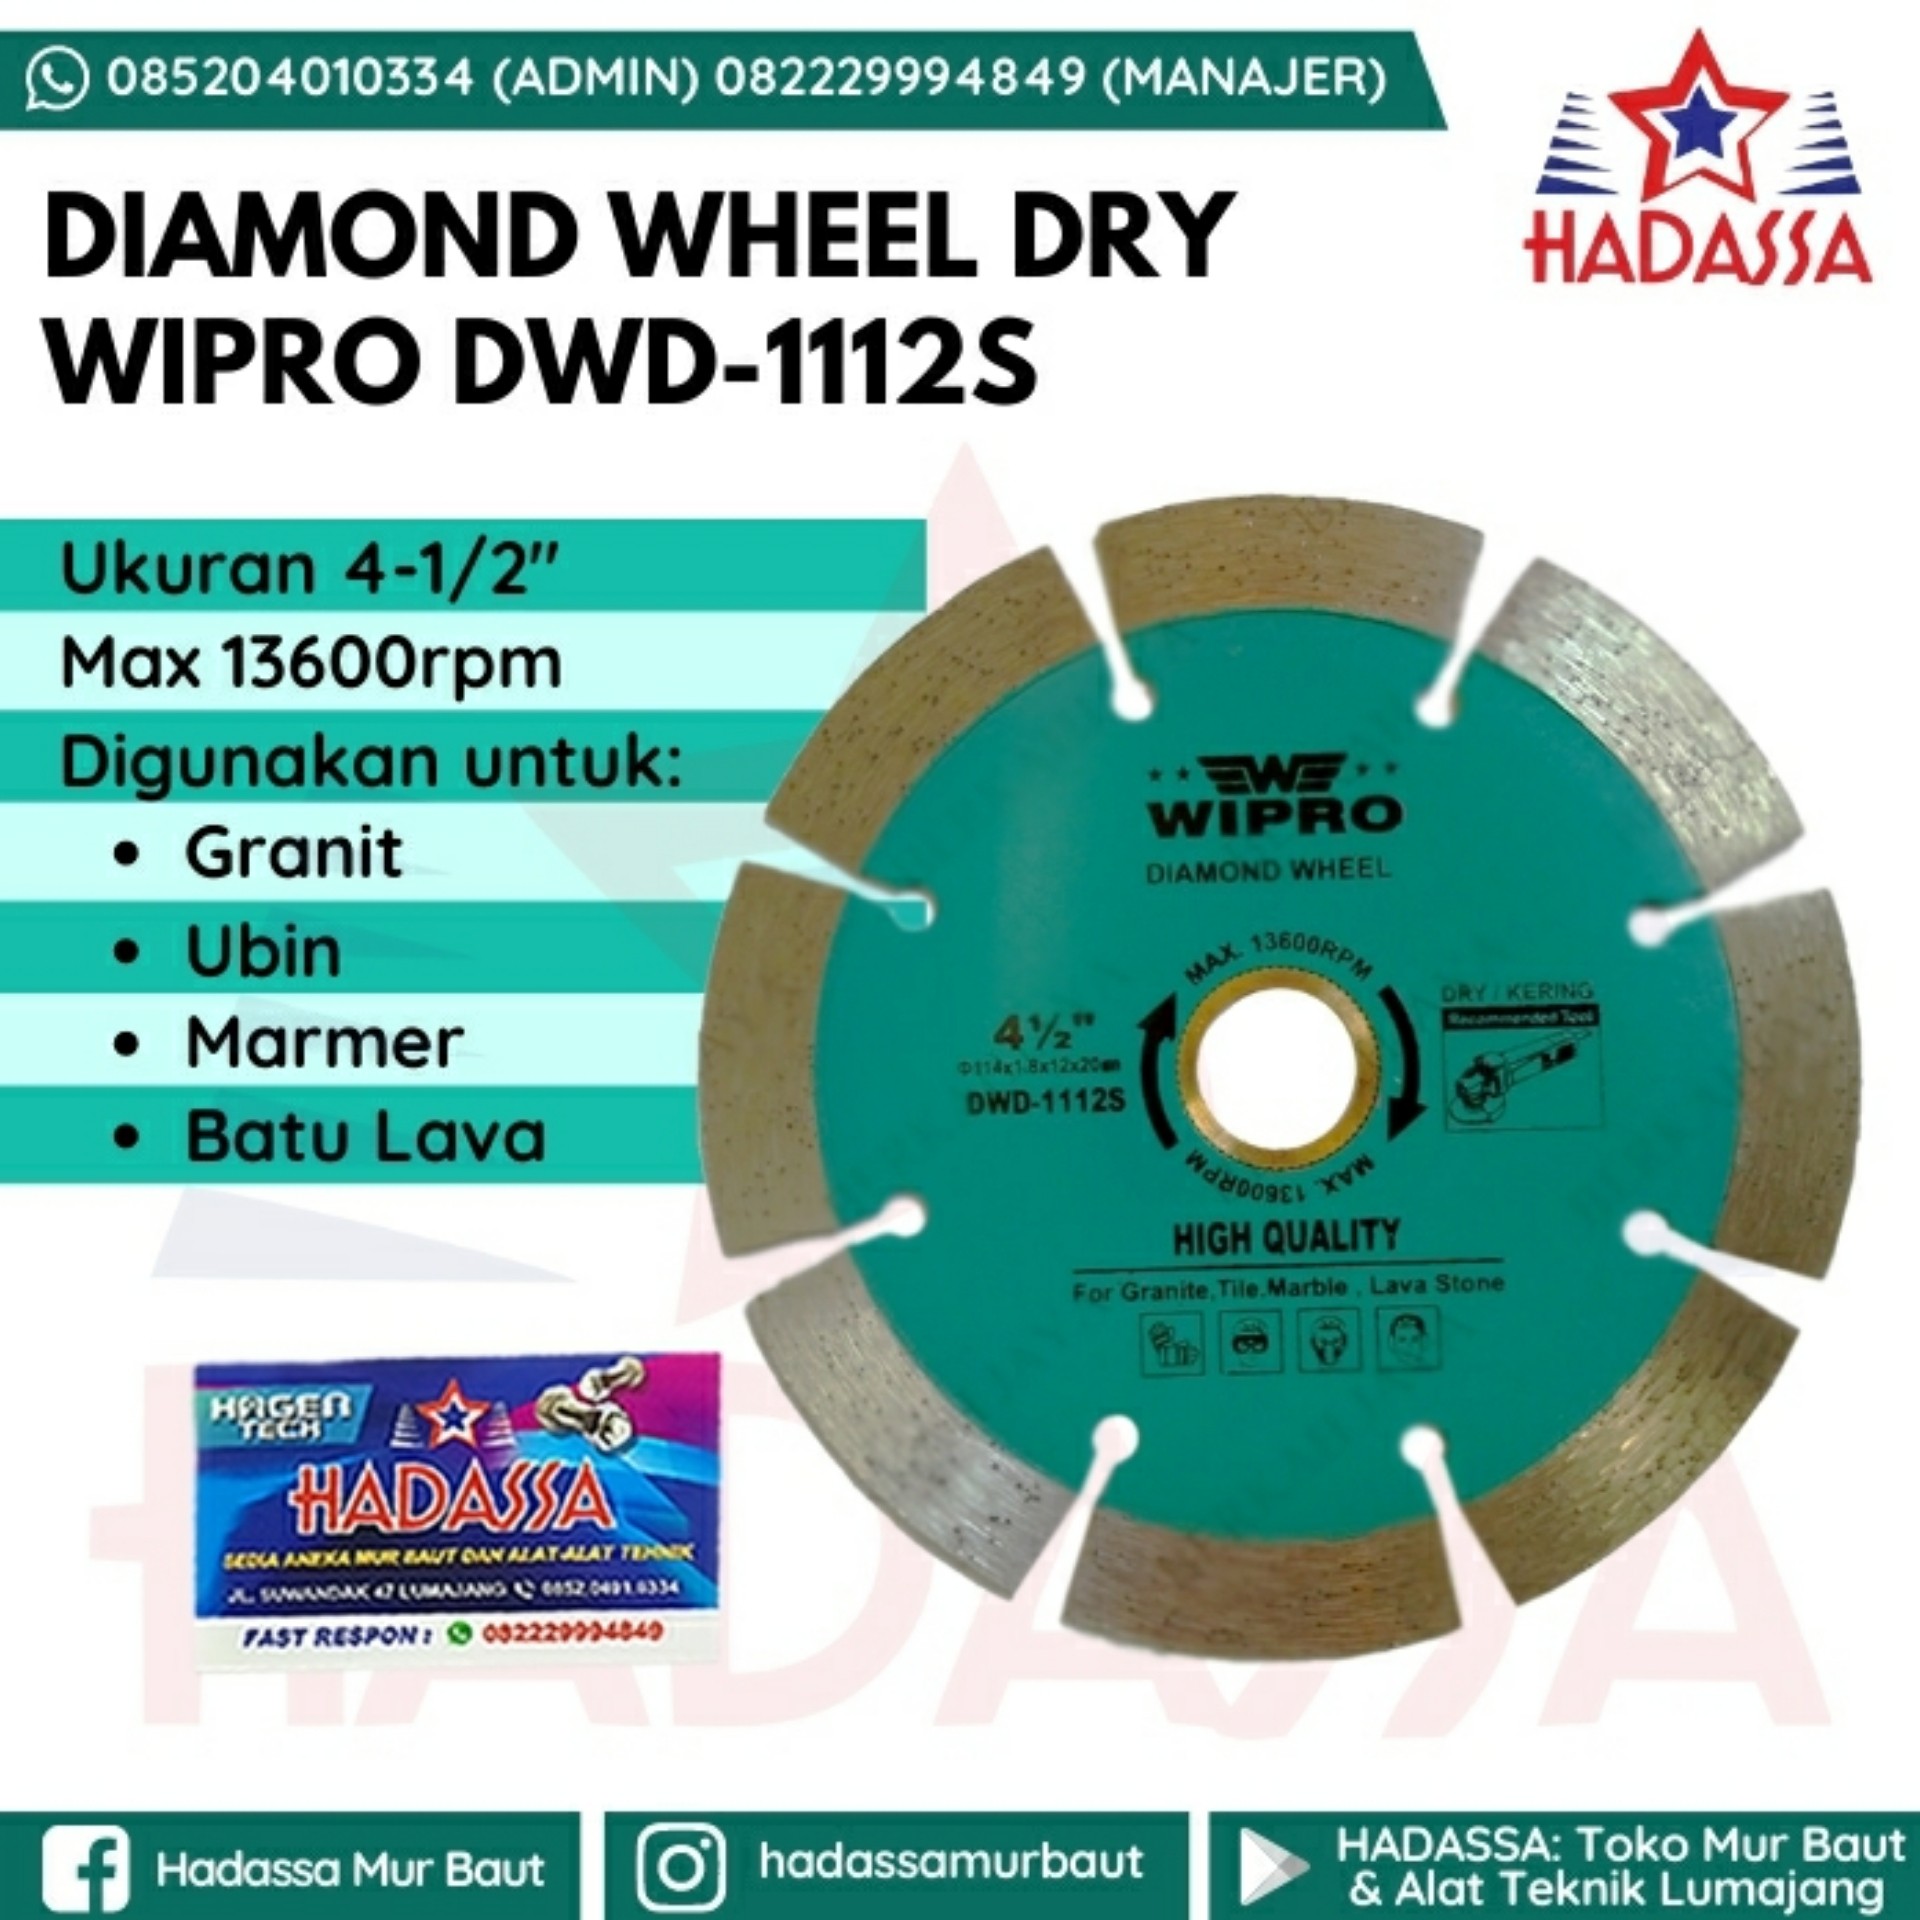 Diamond Wheel Dry Wipro DWD-112S